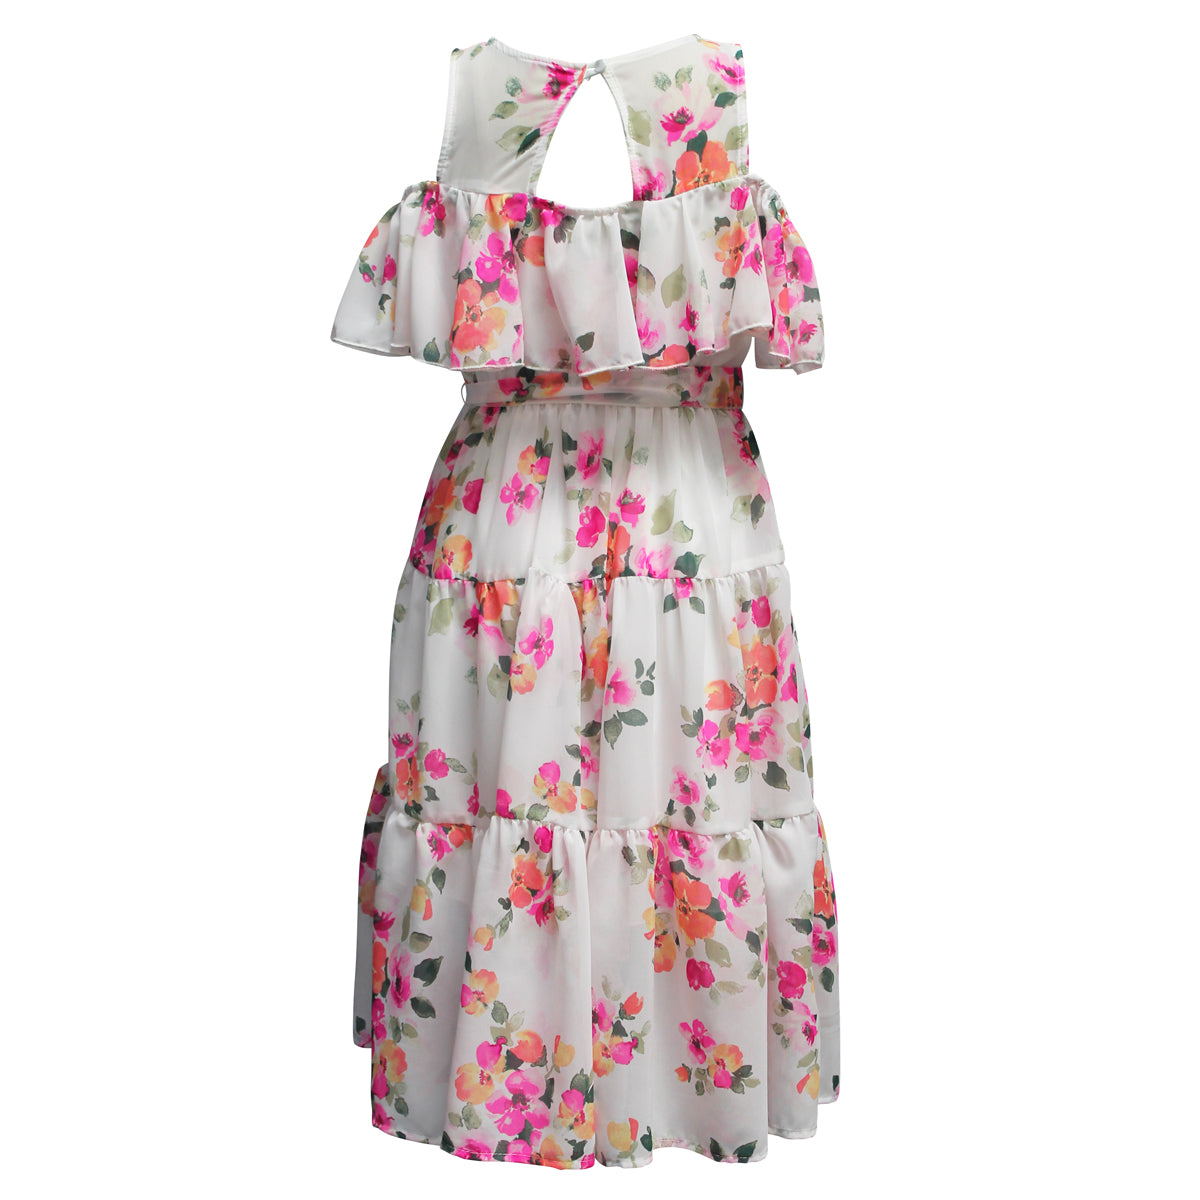 Floral Print Ruffle Maxi Dress